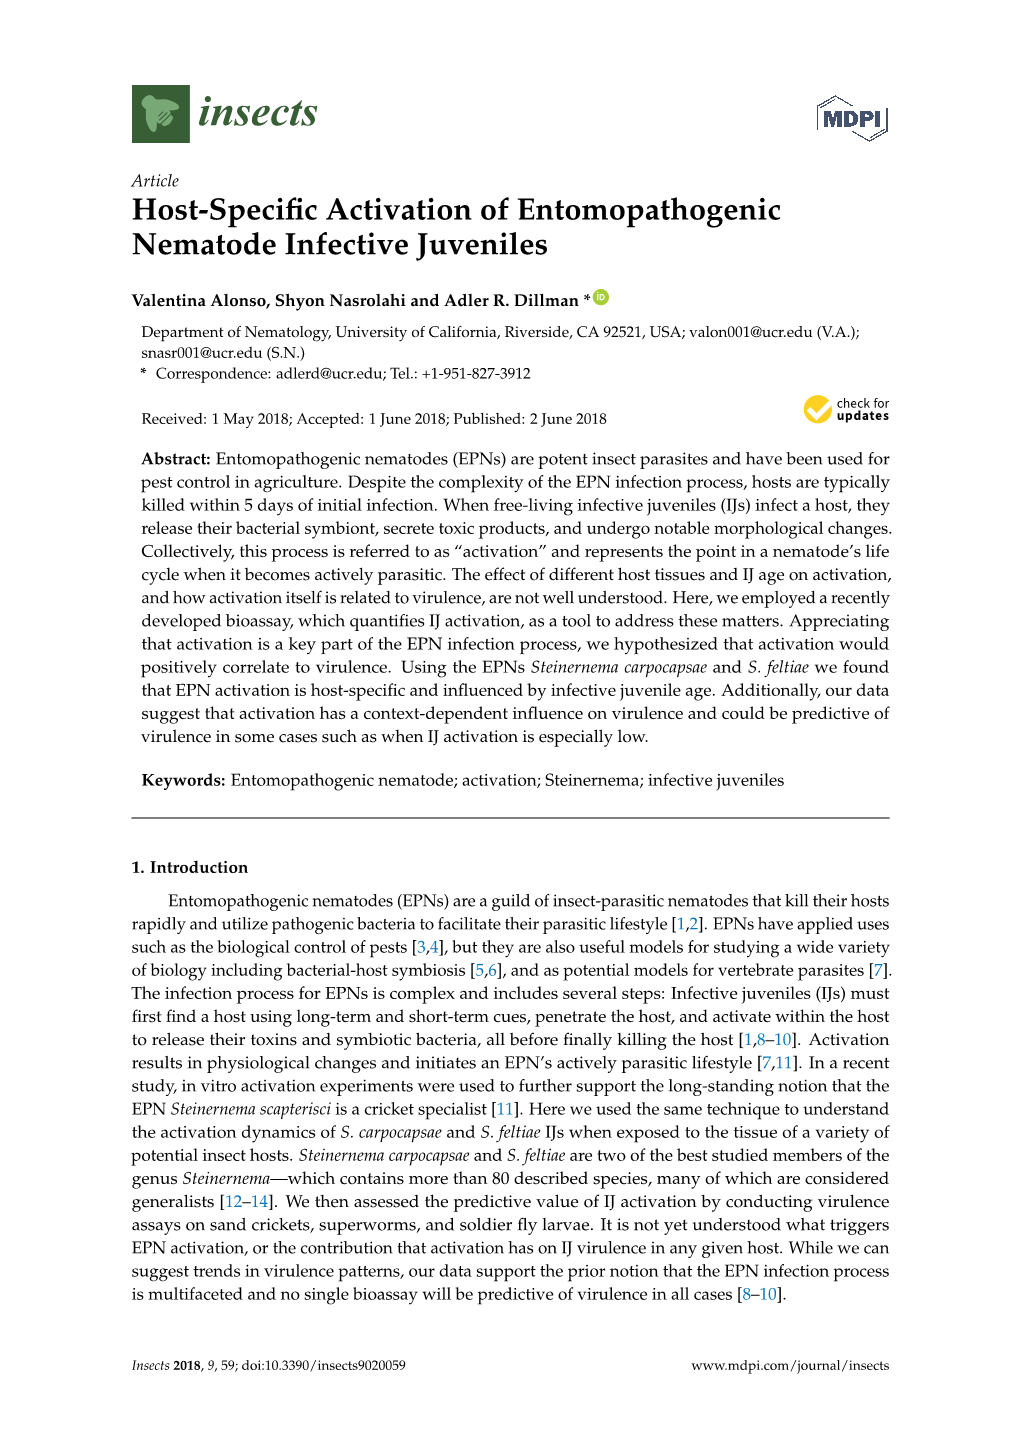 Host-Specific Activation of Entomopathogenic Nematode